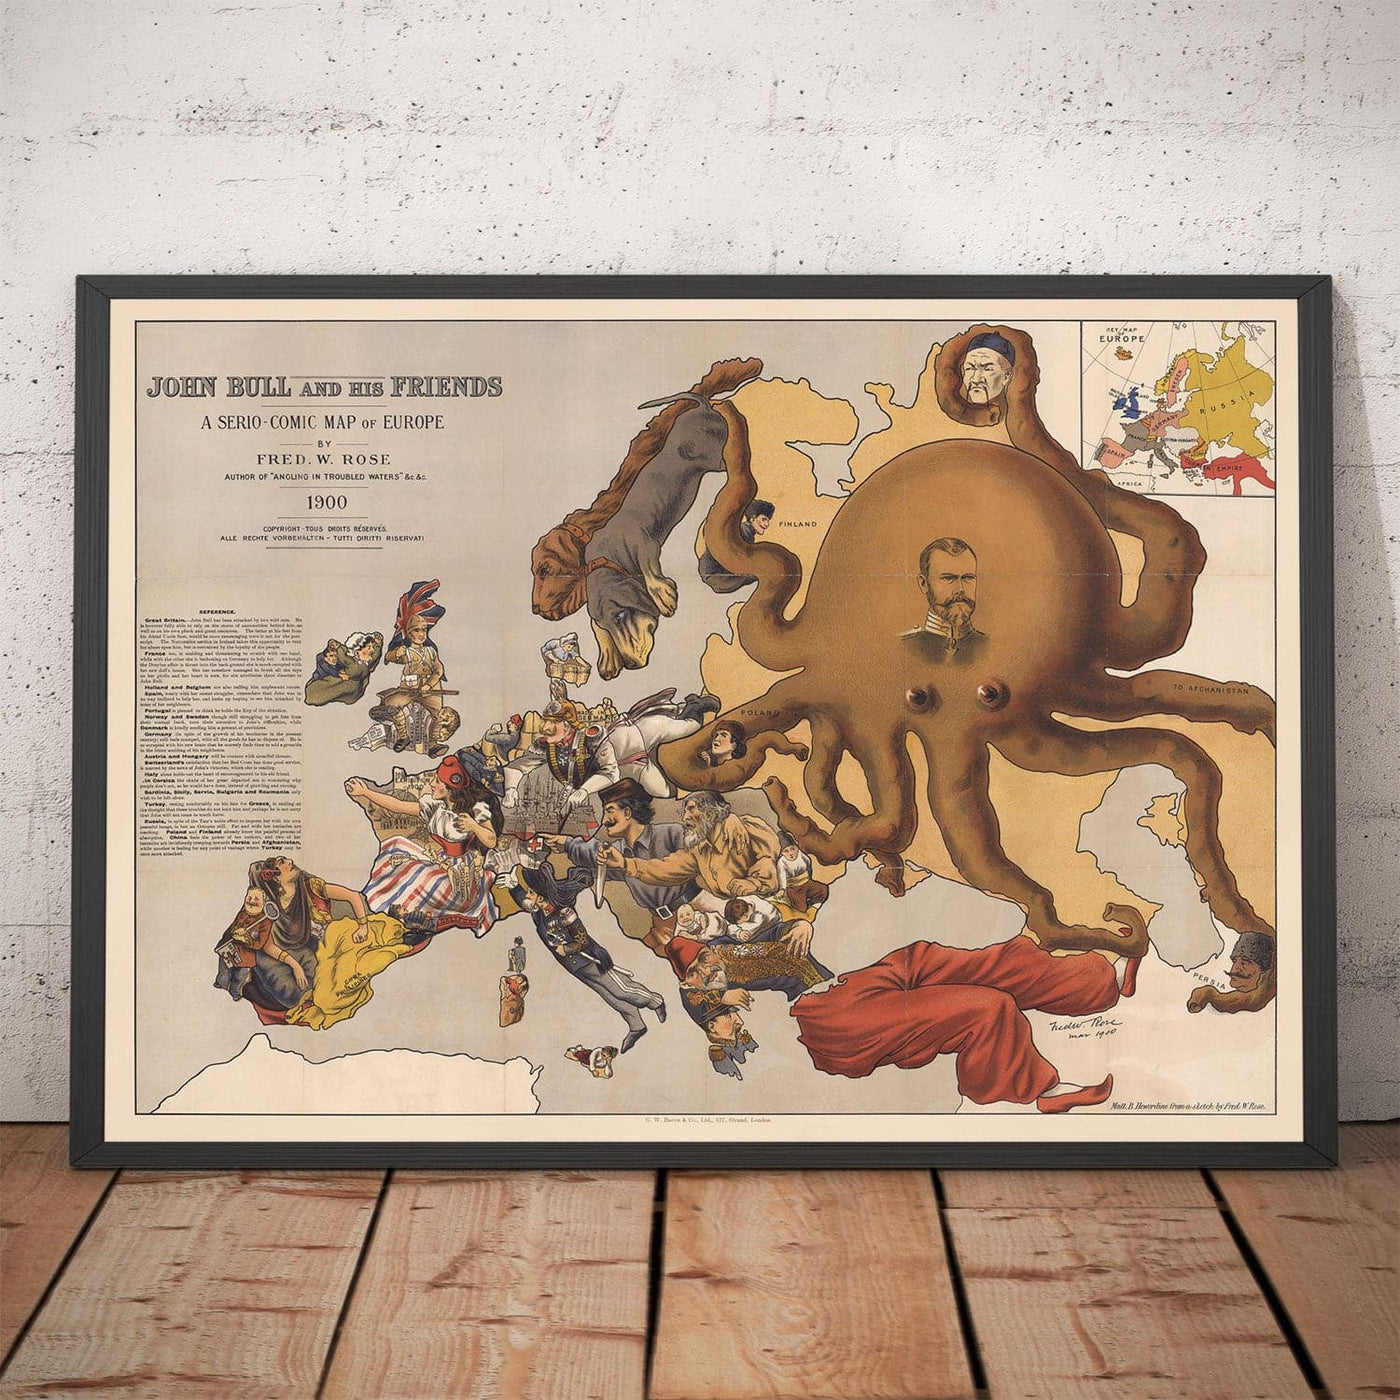 Old Satirical Map of Europe, 1900 by Fredrick Rose - John Bull Propaganda Serio-Comic, Octopus Nikolai II Russian Empire